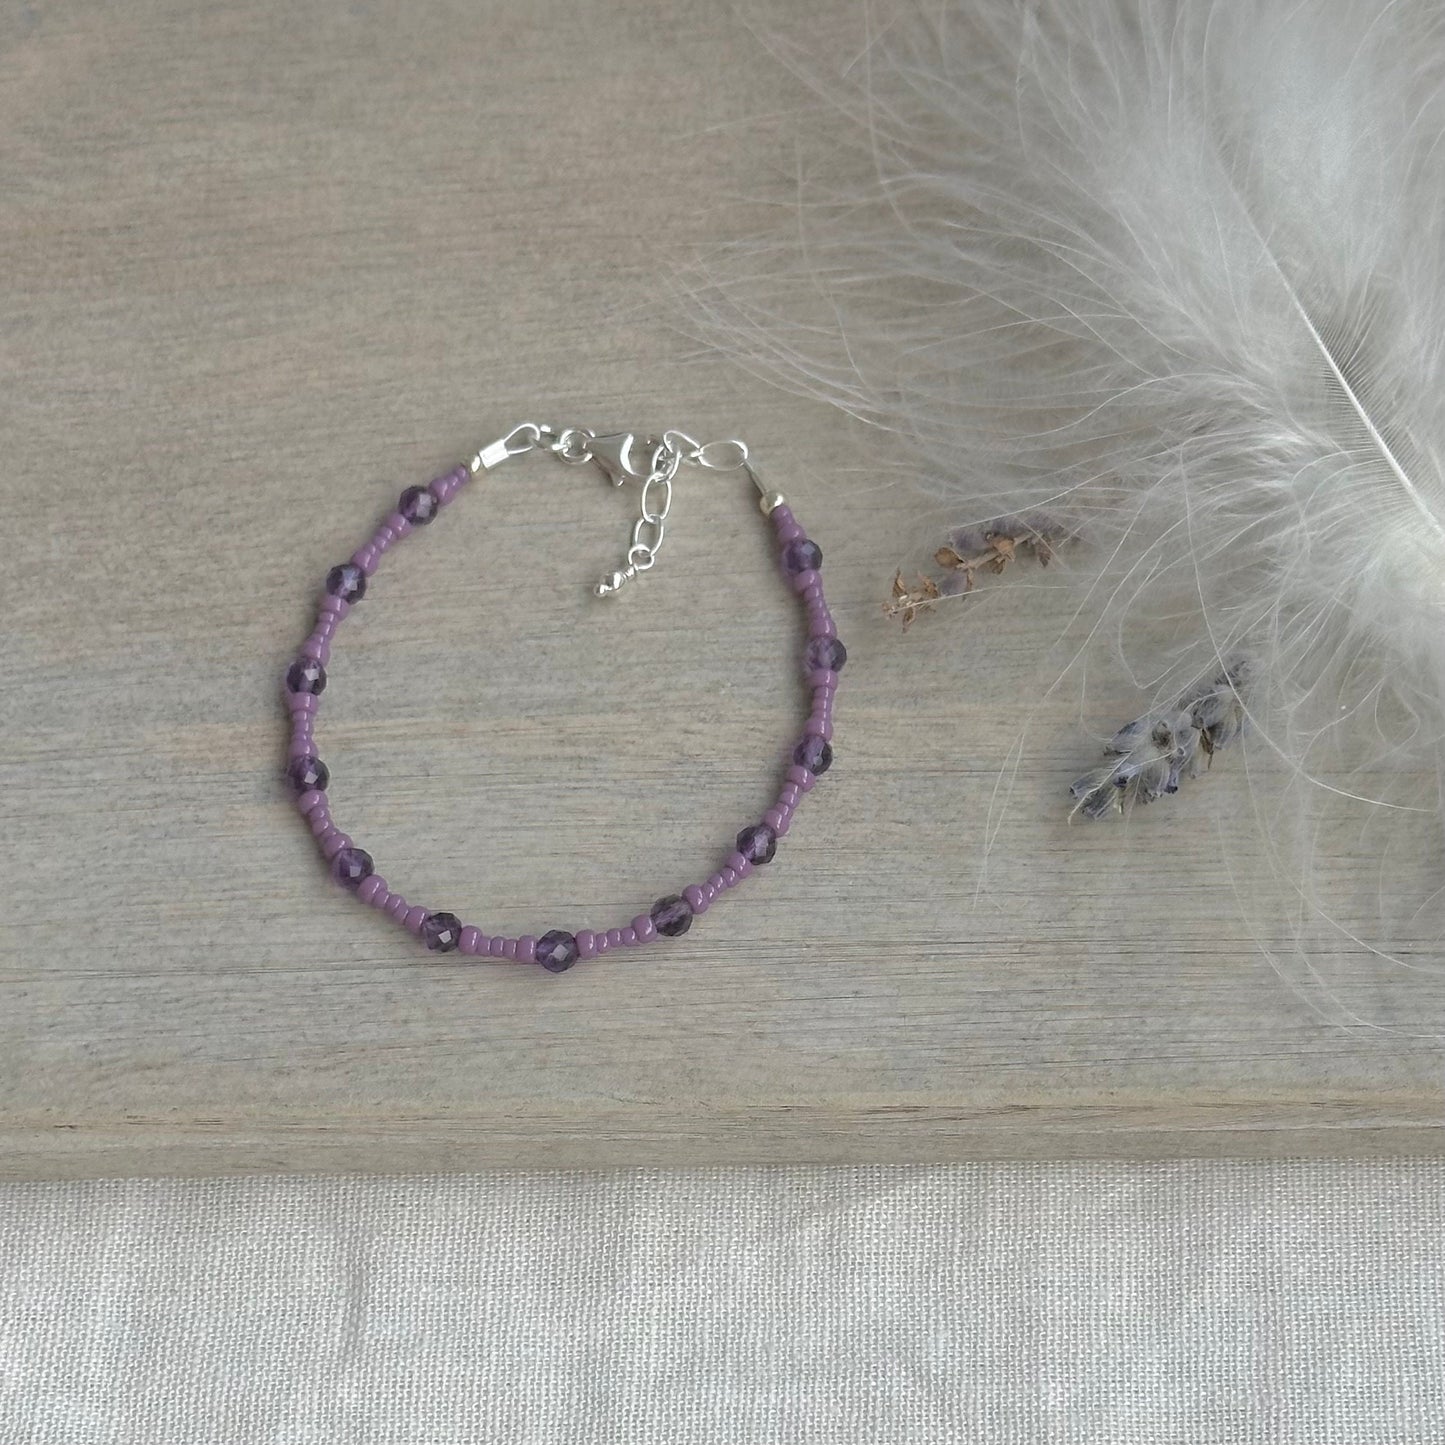 Dainty Amethyst Birthstone and seed bead bracelet